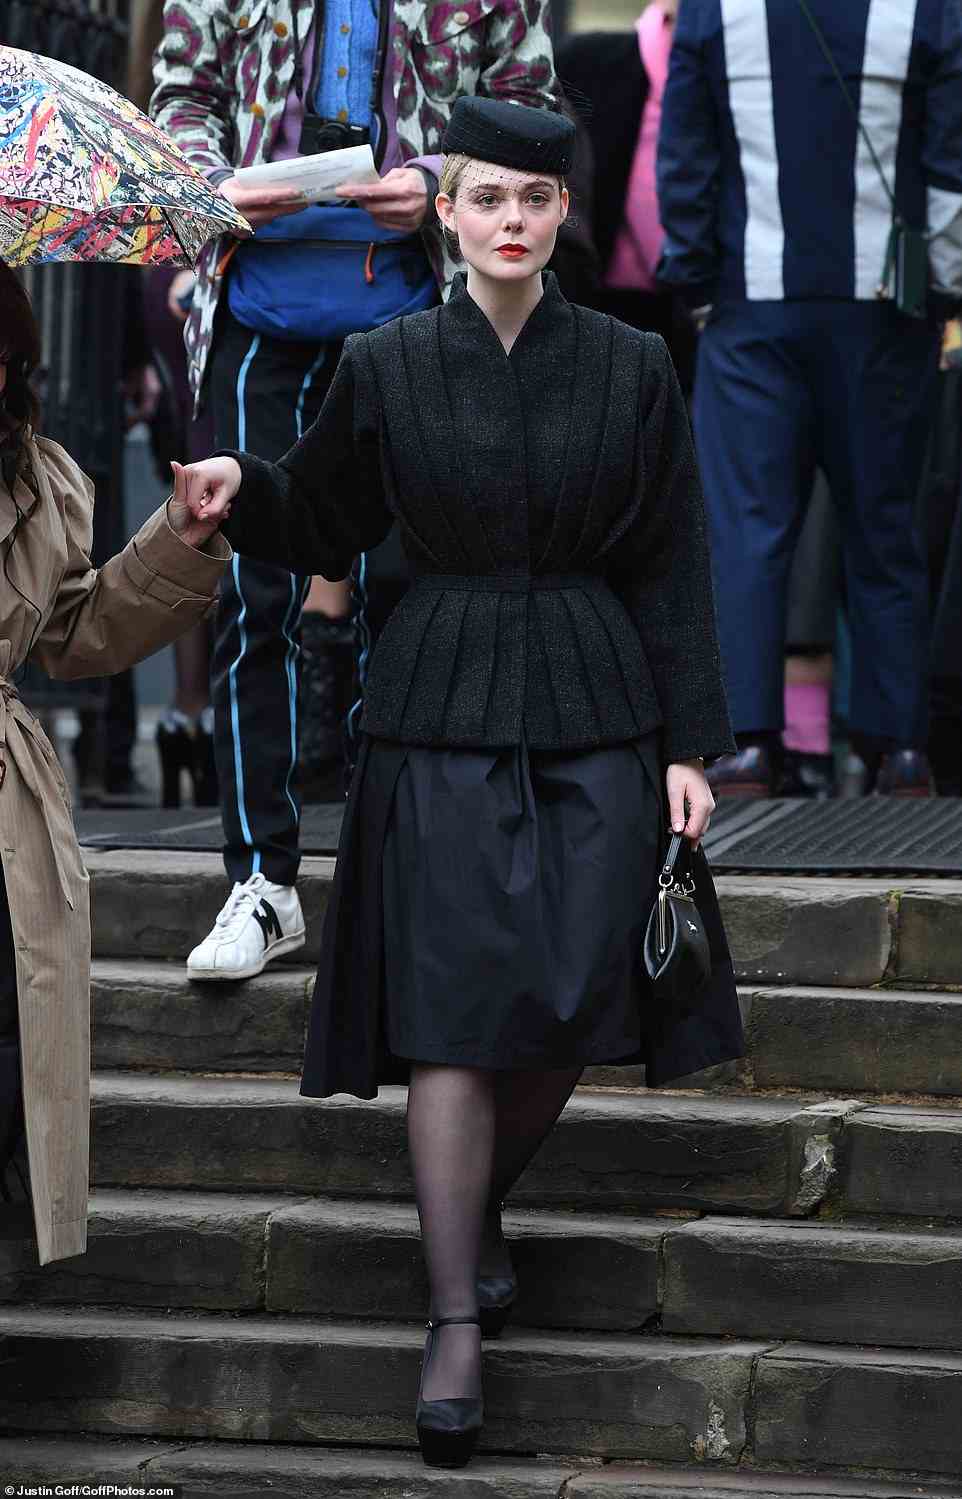 Actress Elle Fanning wore an all-black ensemble with a matching pillar-box hat